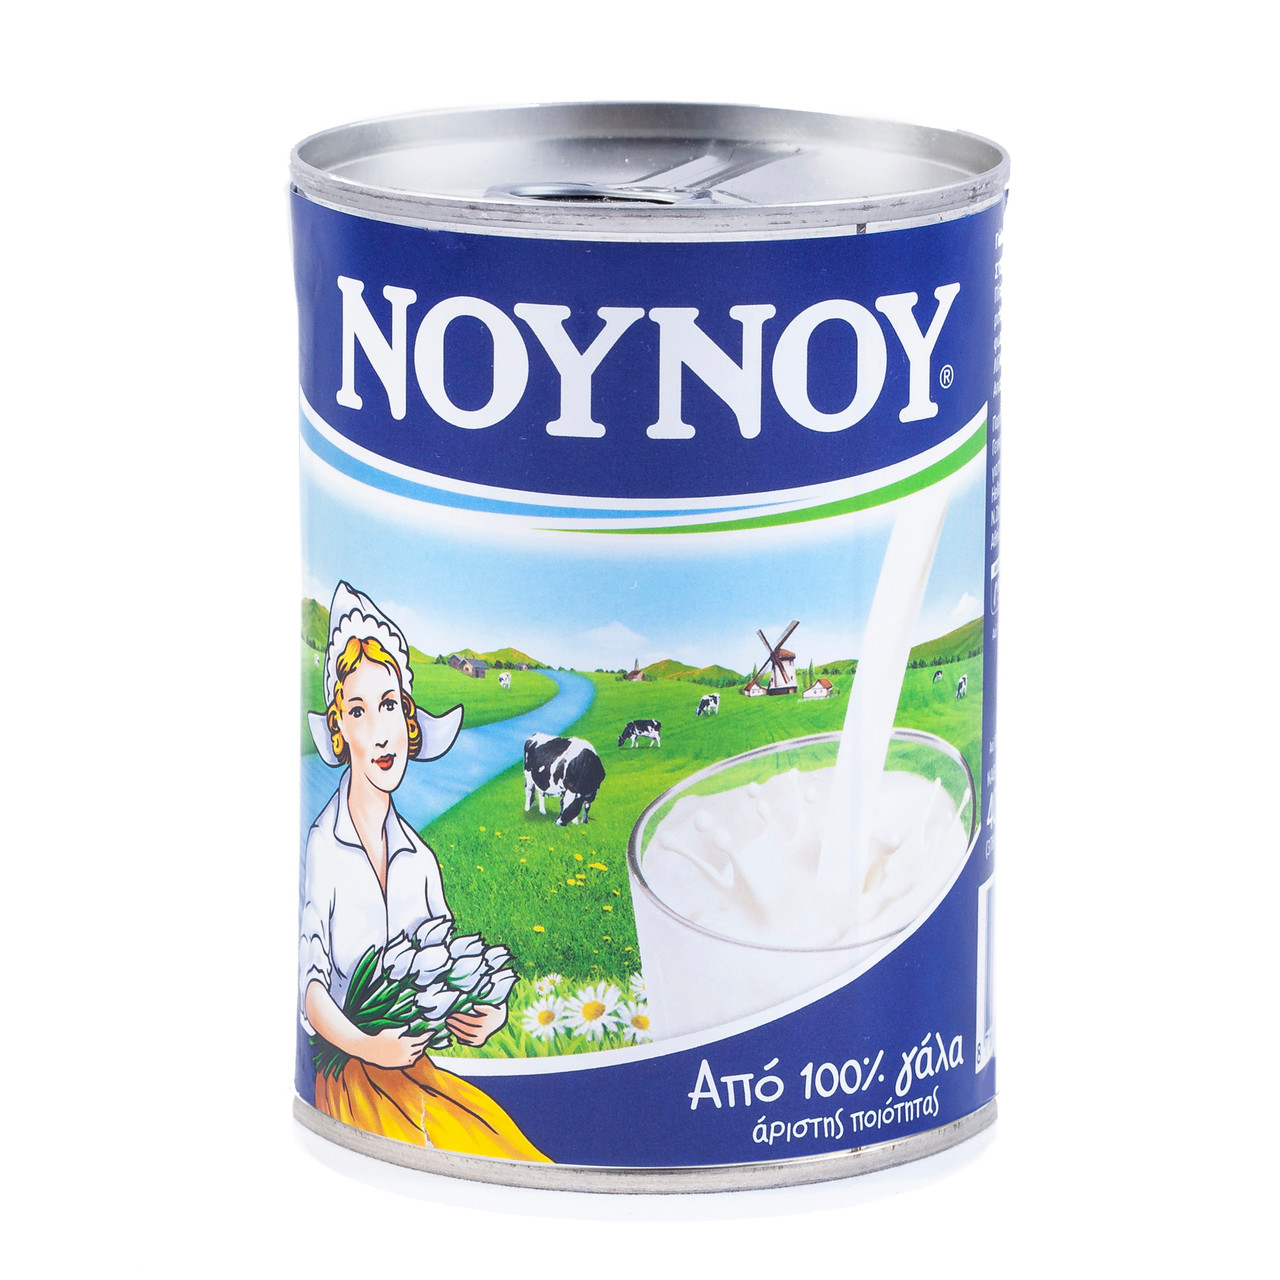 Nounou (Noynoy) Milk (410gr)